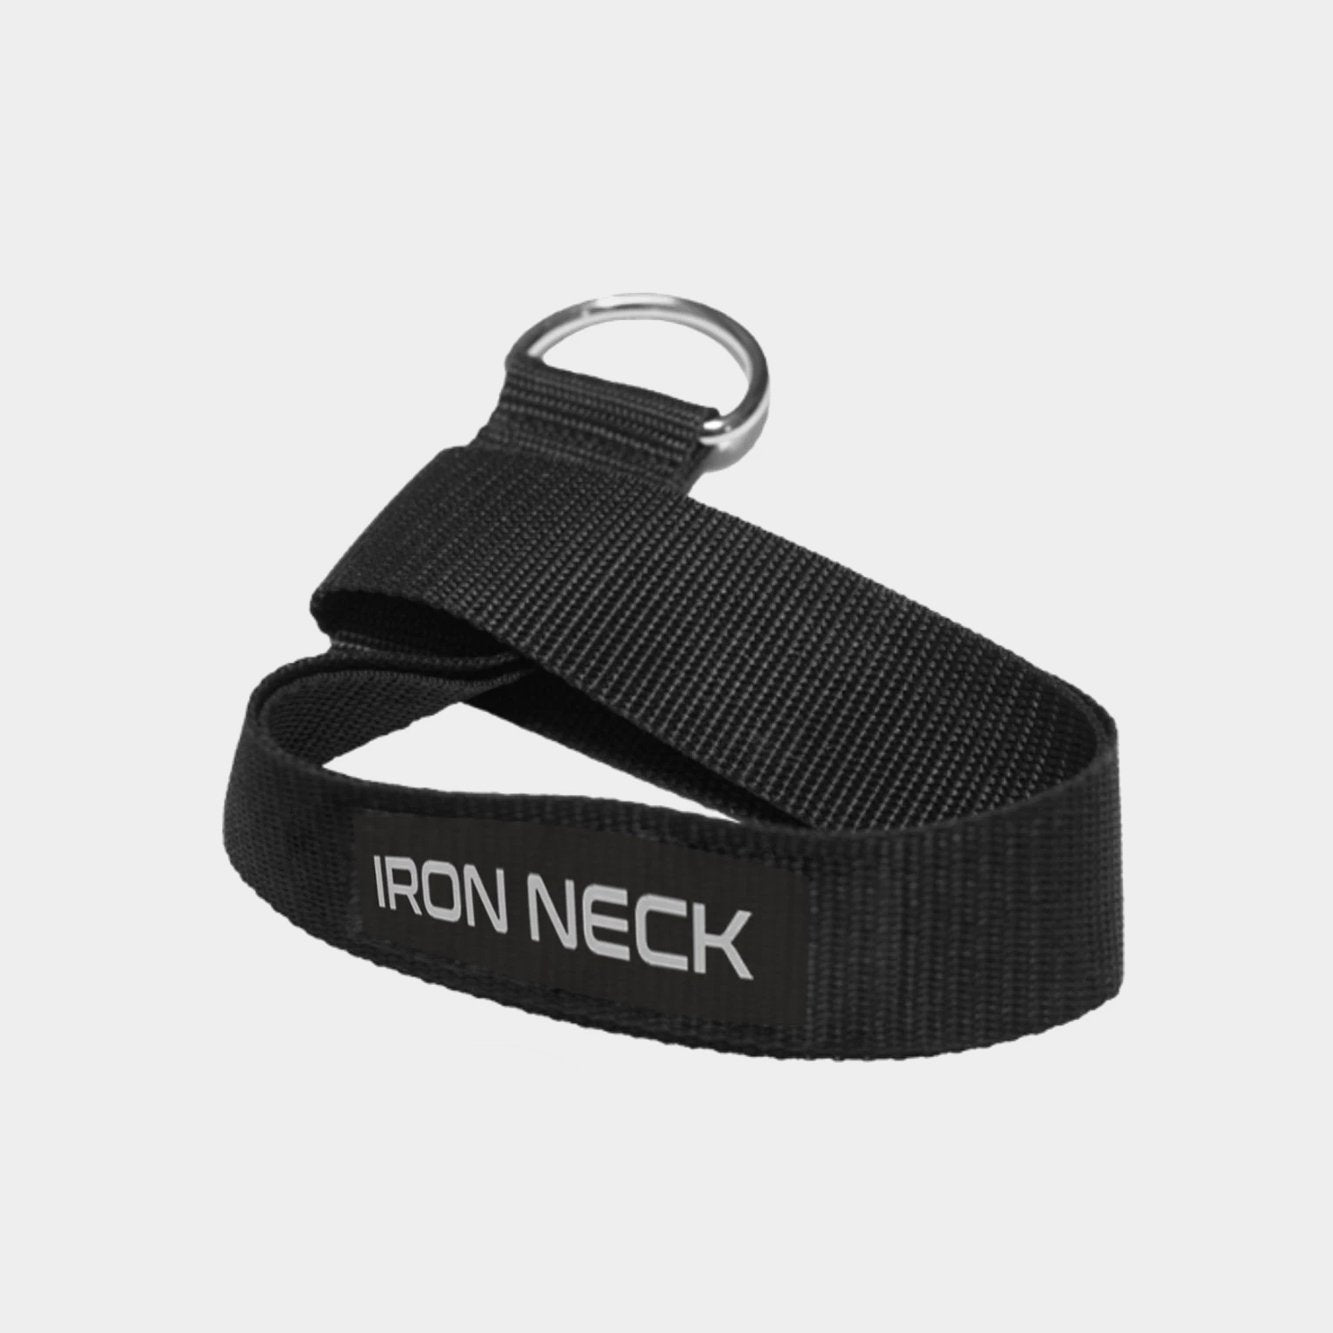 EZ Cinch Anchor Accessories Iron Neck   